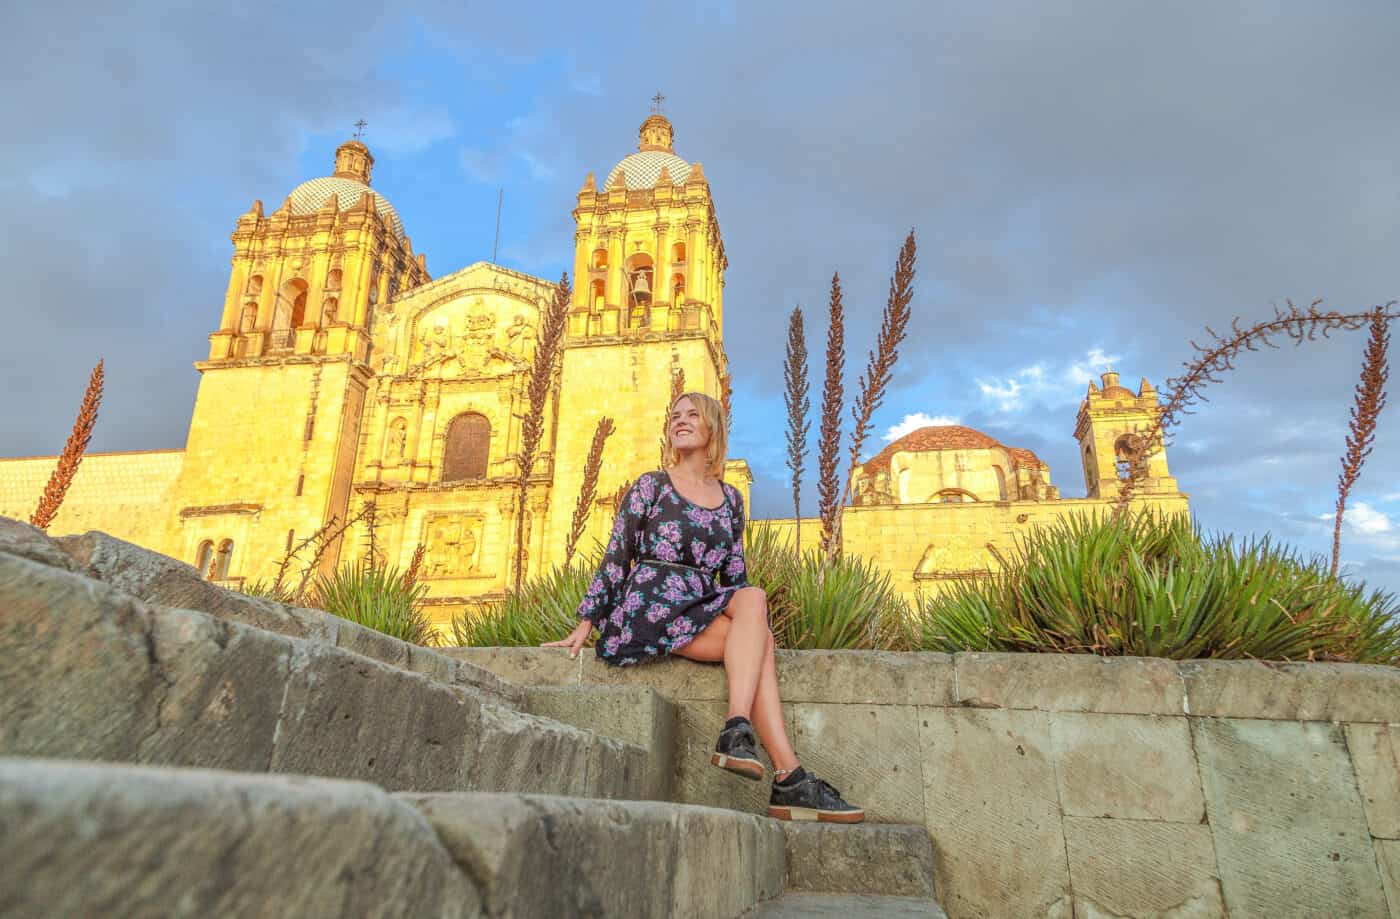 lora sitting in front of church in oaxaca city